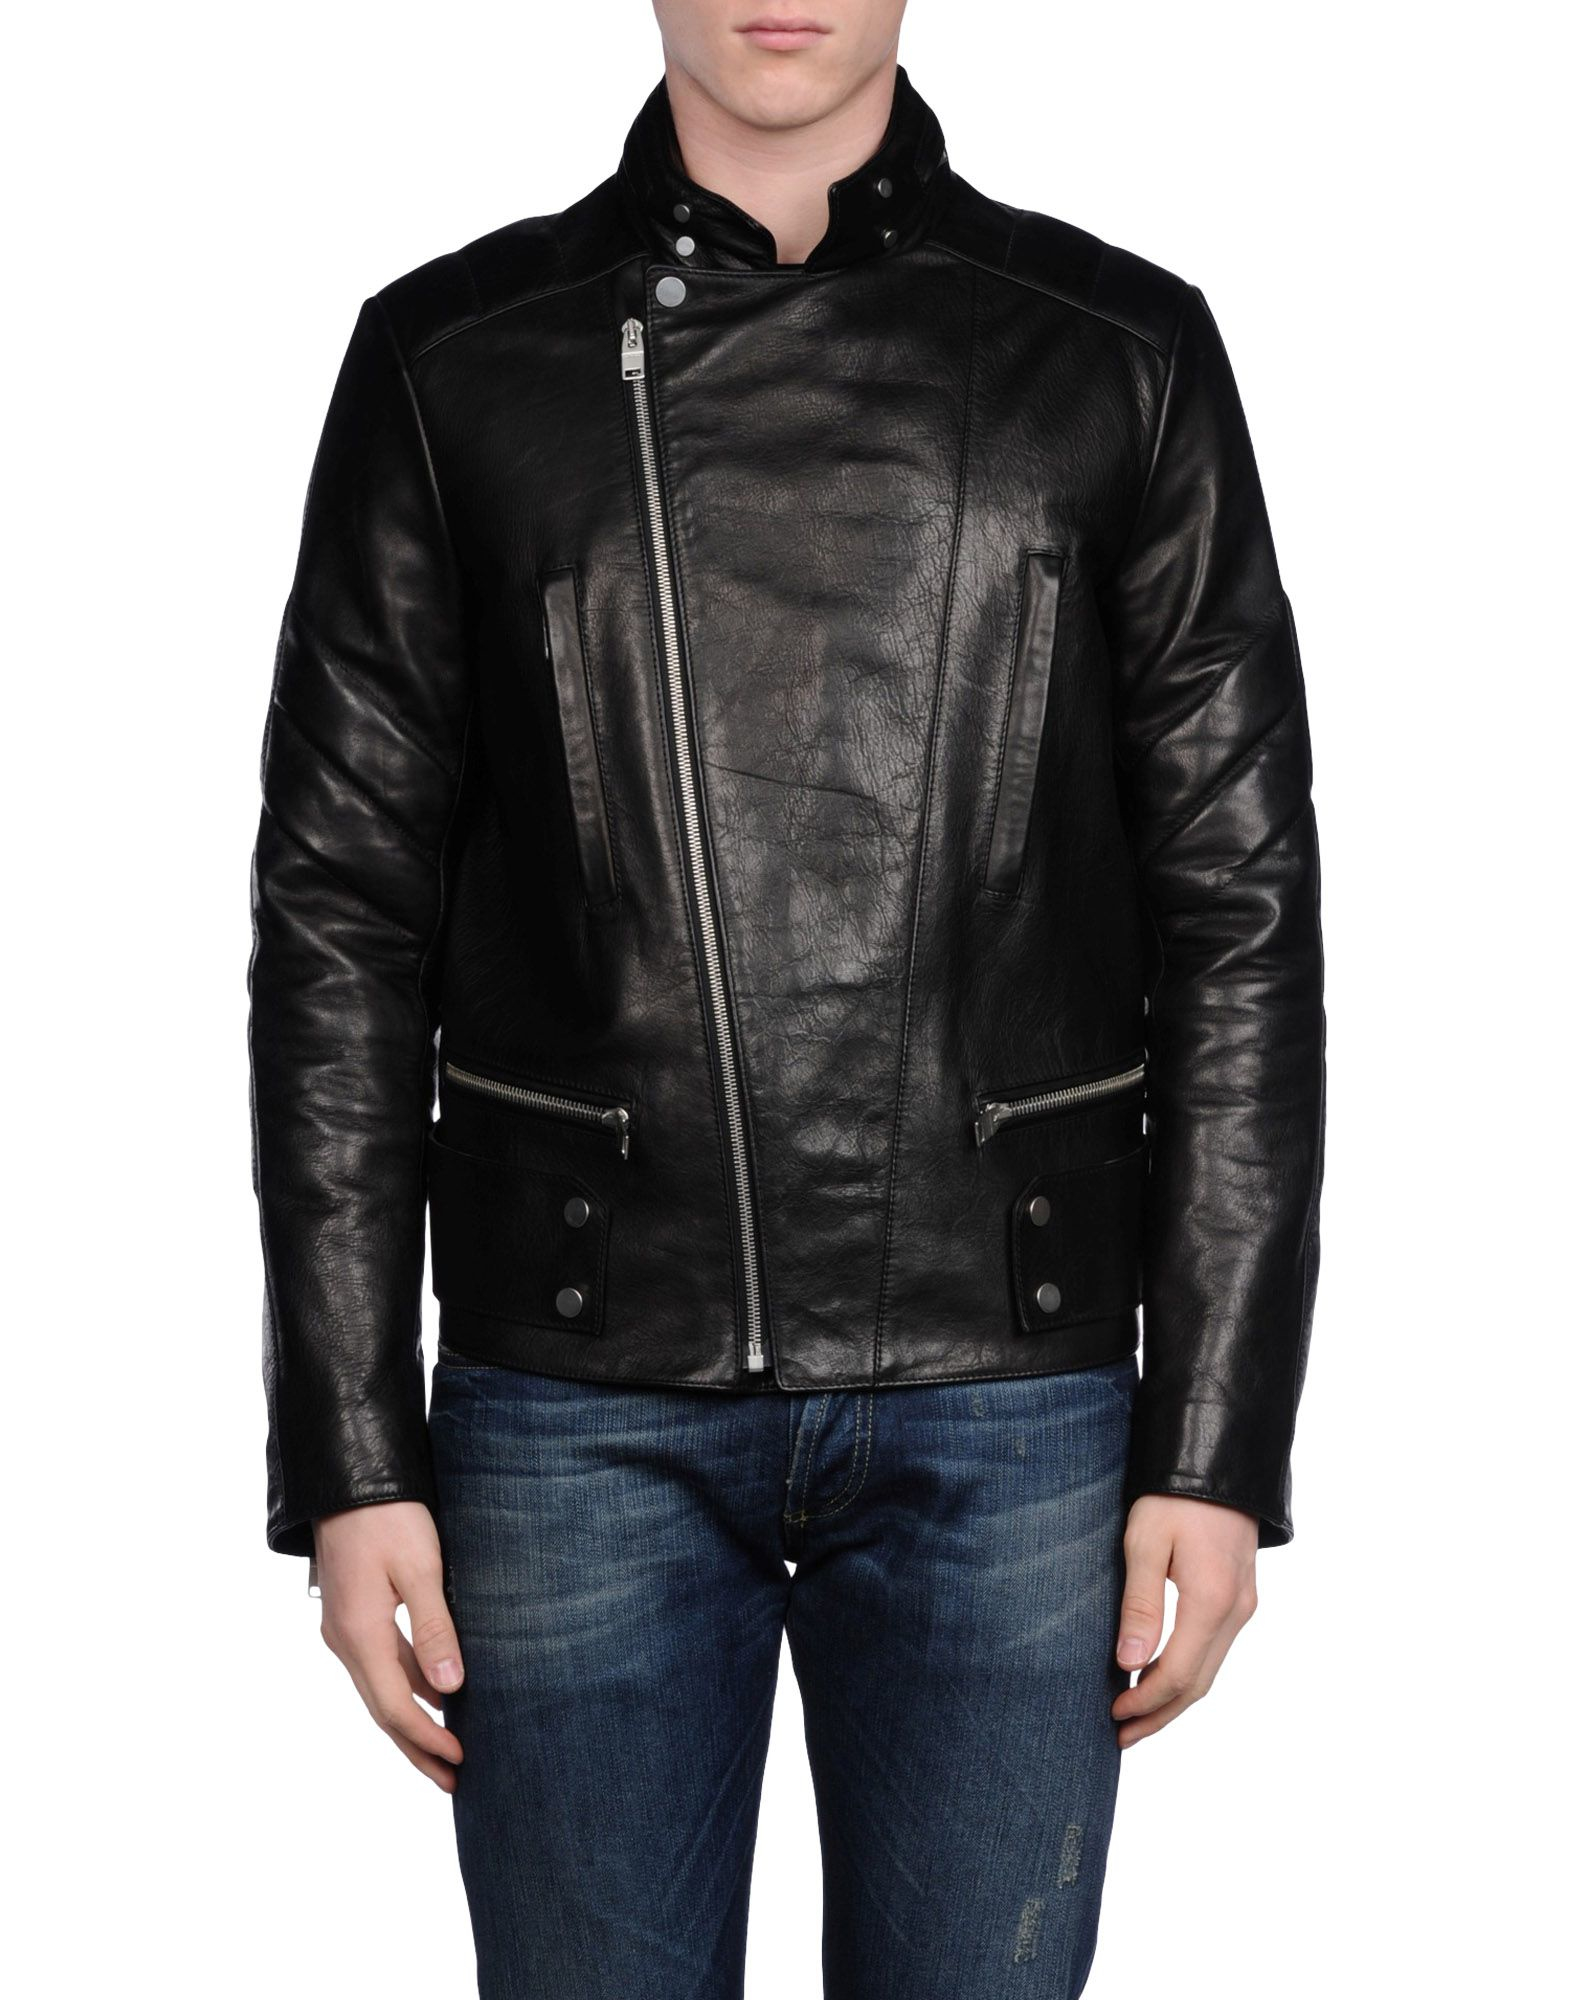 Balenciaga Leather Jacket in Black for Men - Lyst